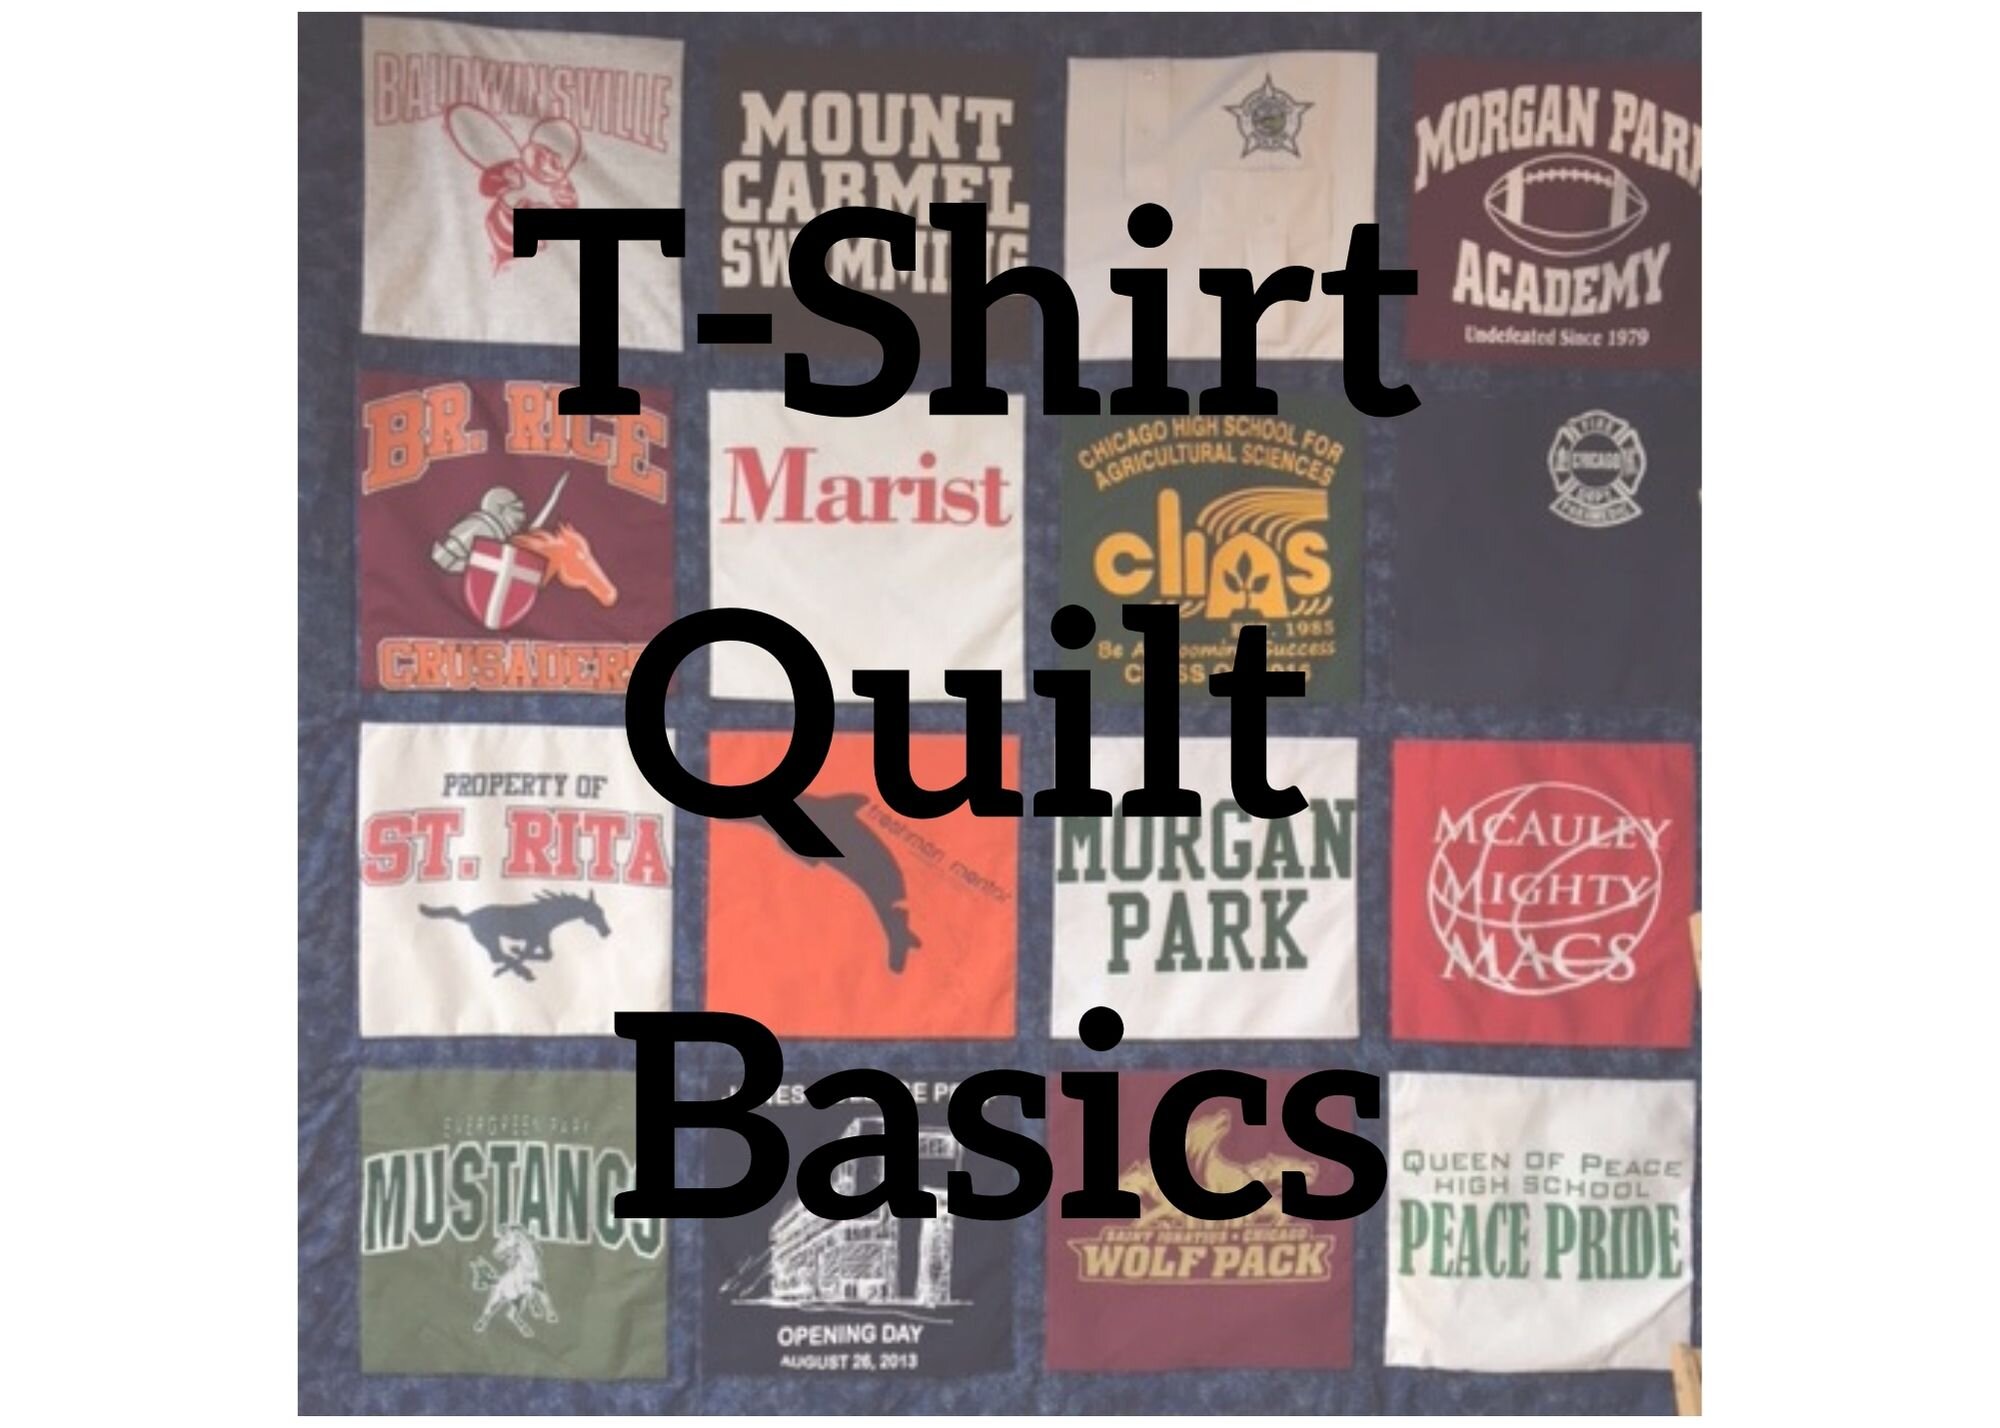 C & T Publishing The T-Shirt Quilt Book